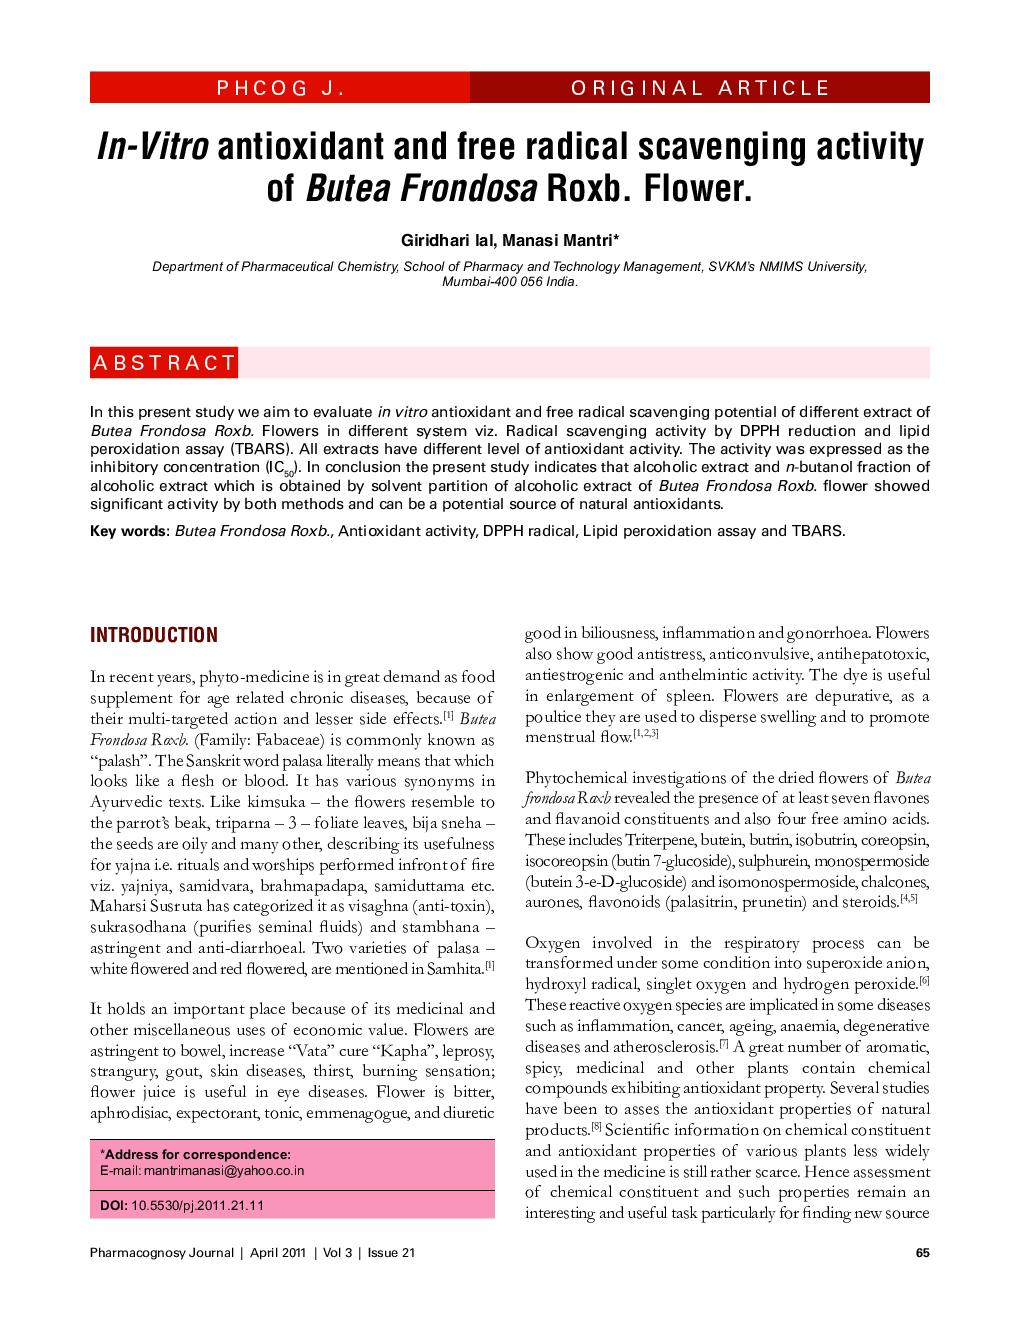 In-Vitro antioxidant and free radical scavenging activity of Butea Frondosa Roxb. Flower